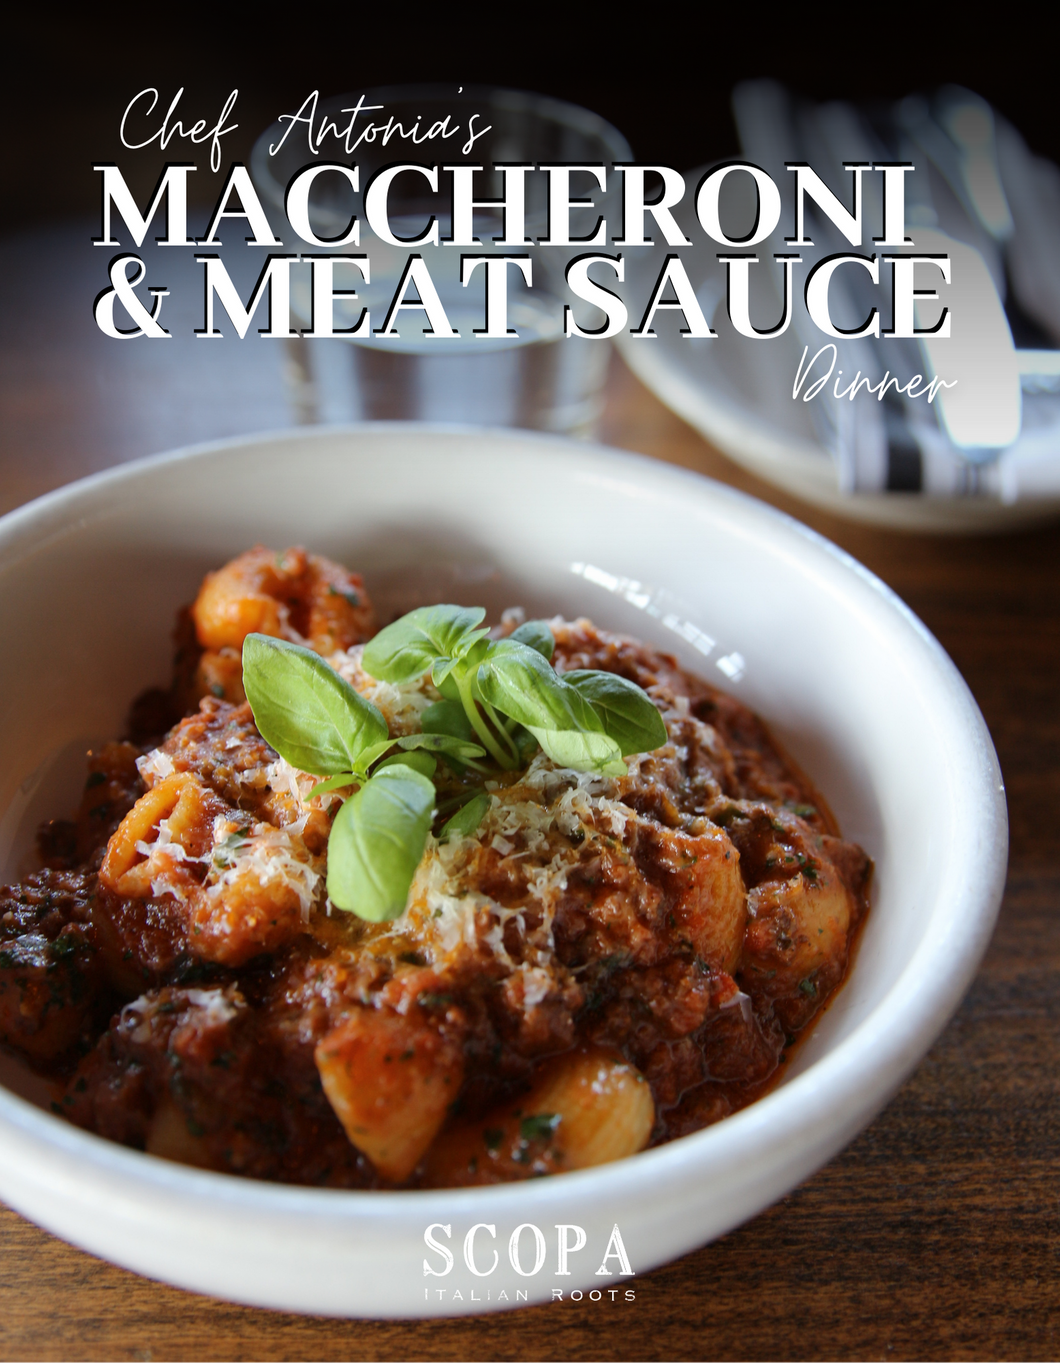 Maccheroni & Meat Sauce Family Pasta Dinner